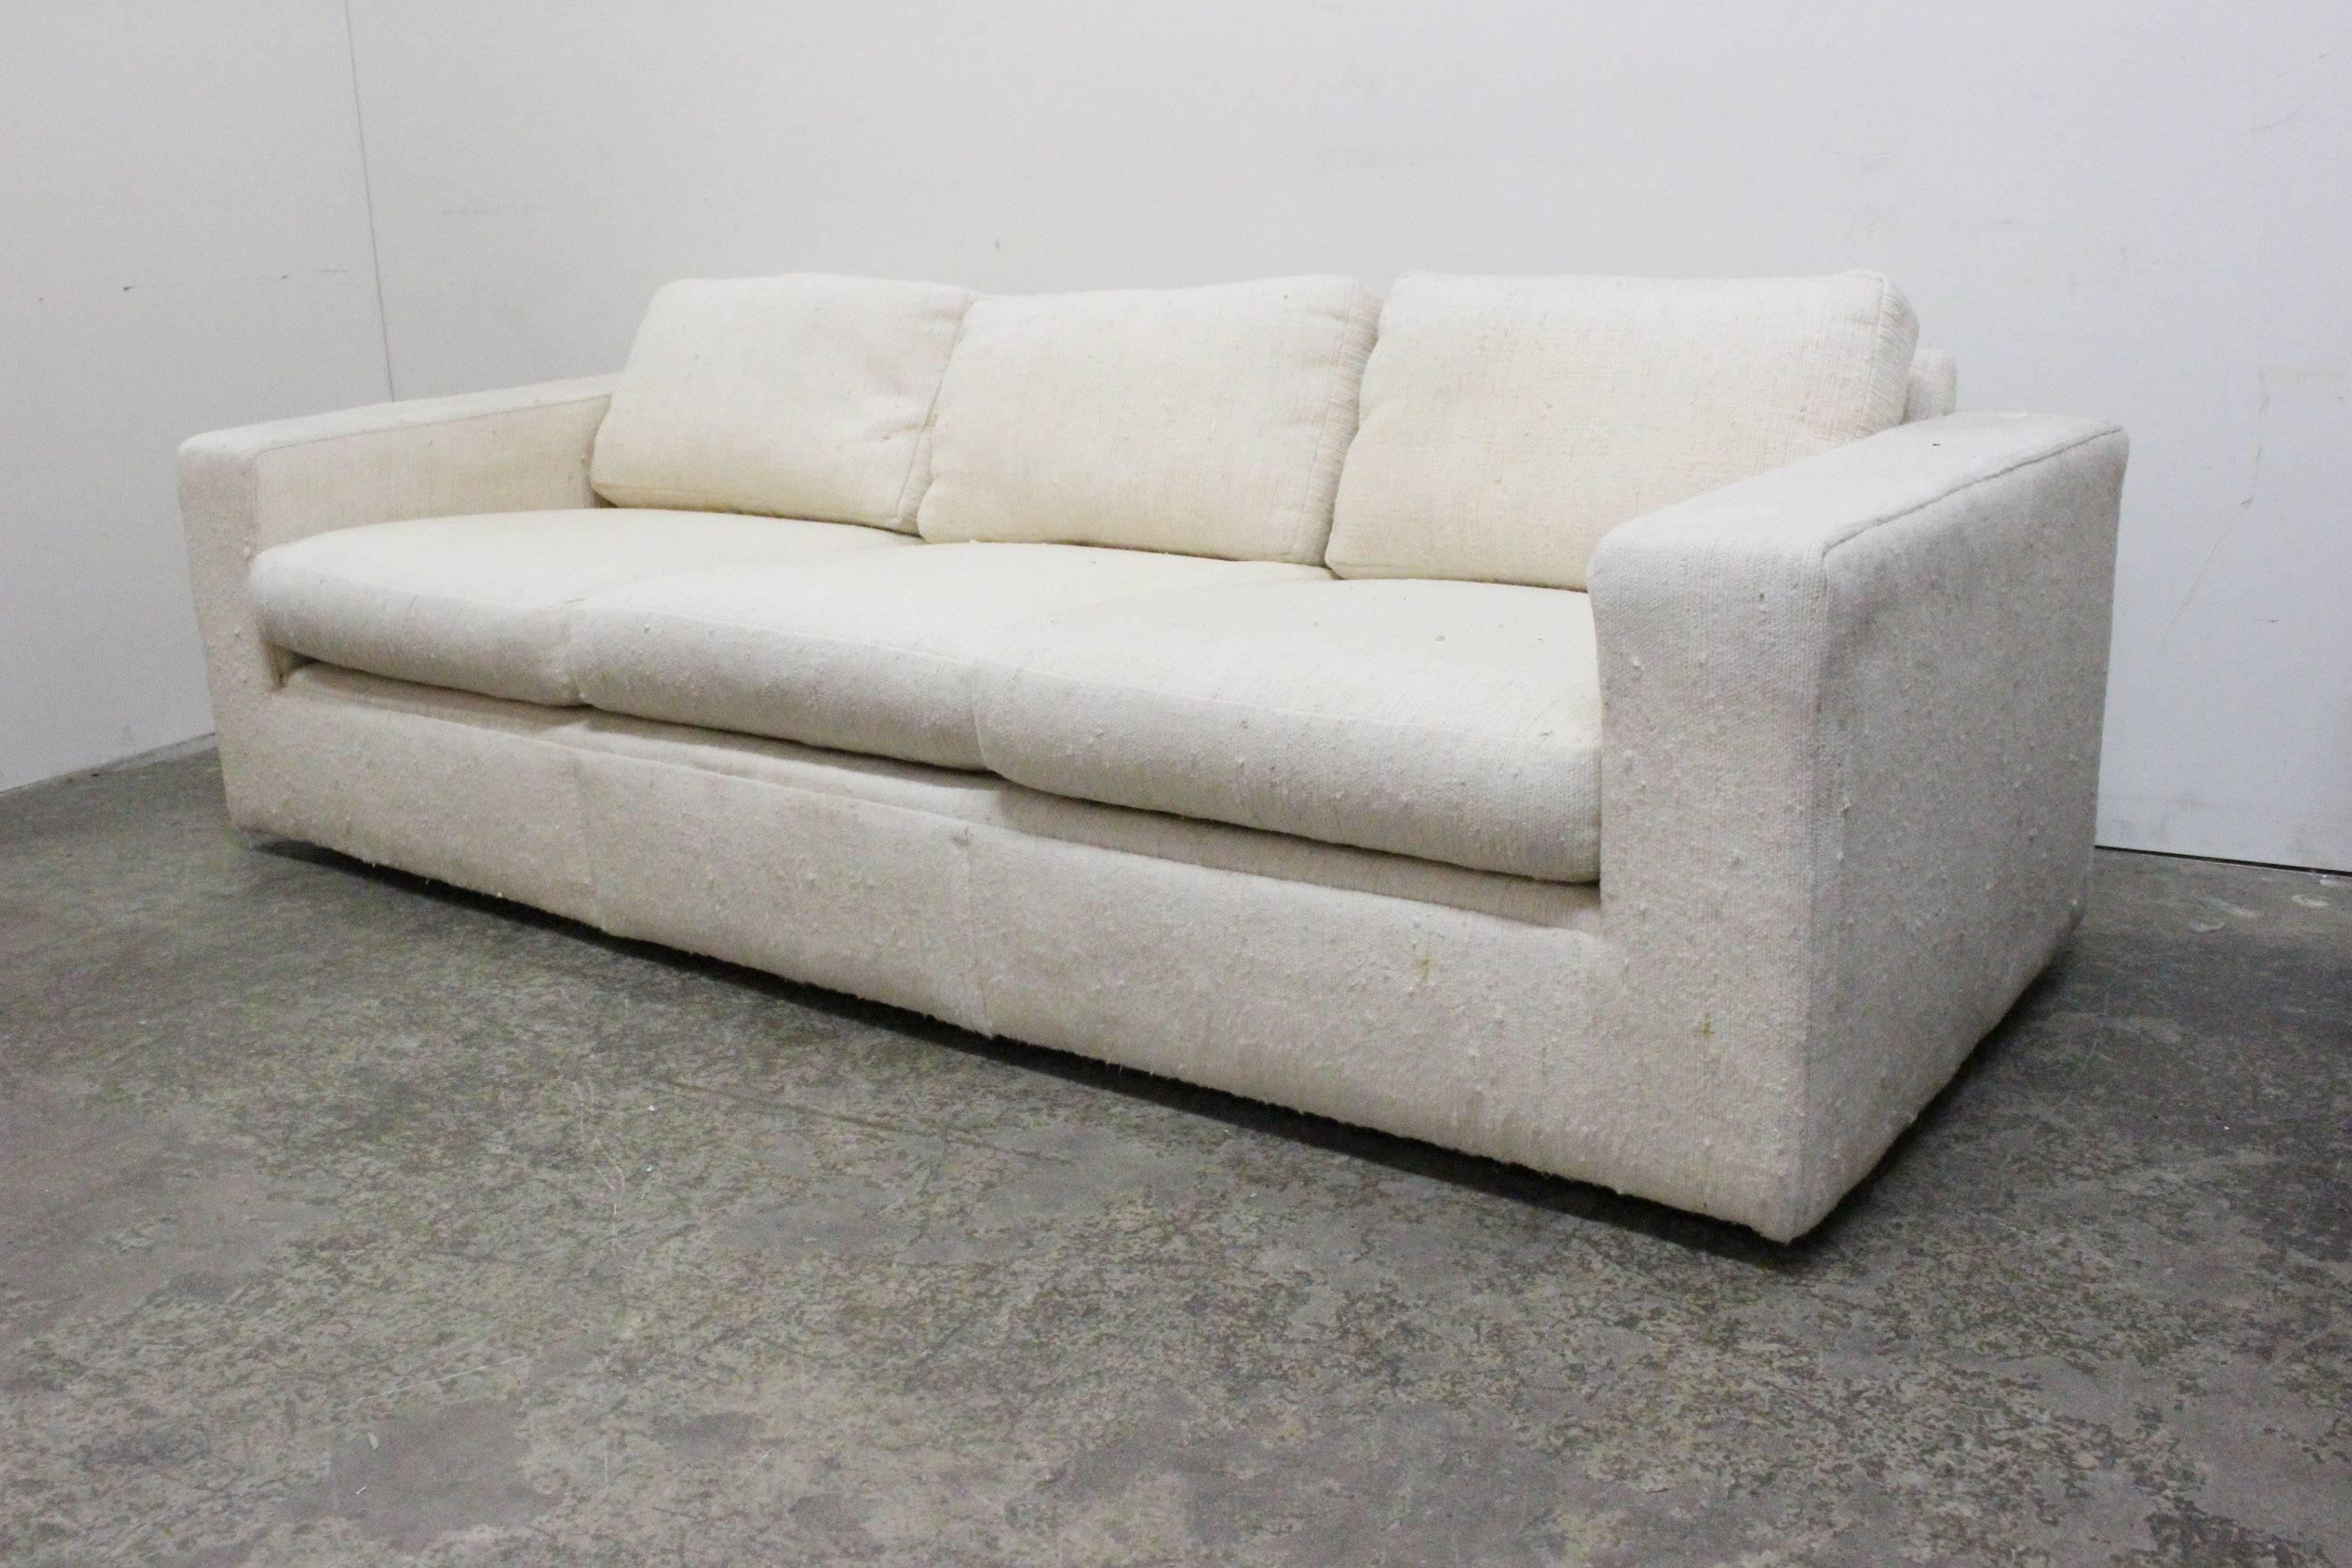 Modern Milo Baughman Cube Sofa. Upholstered in orignal nubby cream fabric.

dimensions: 84